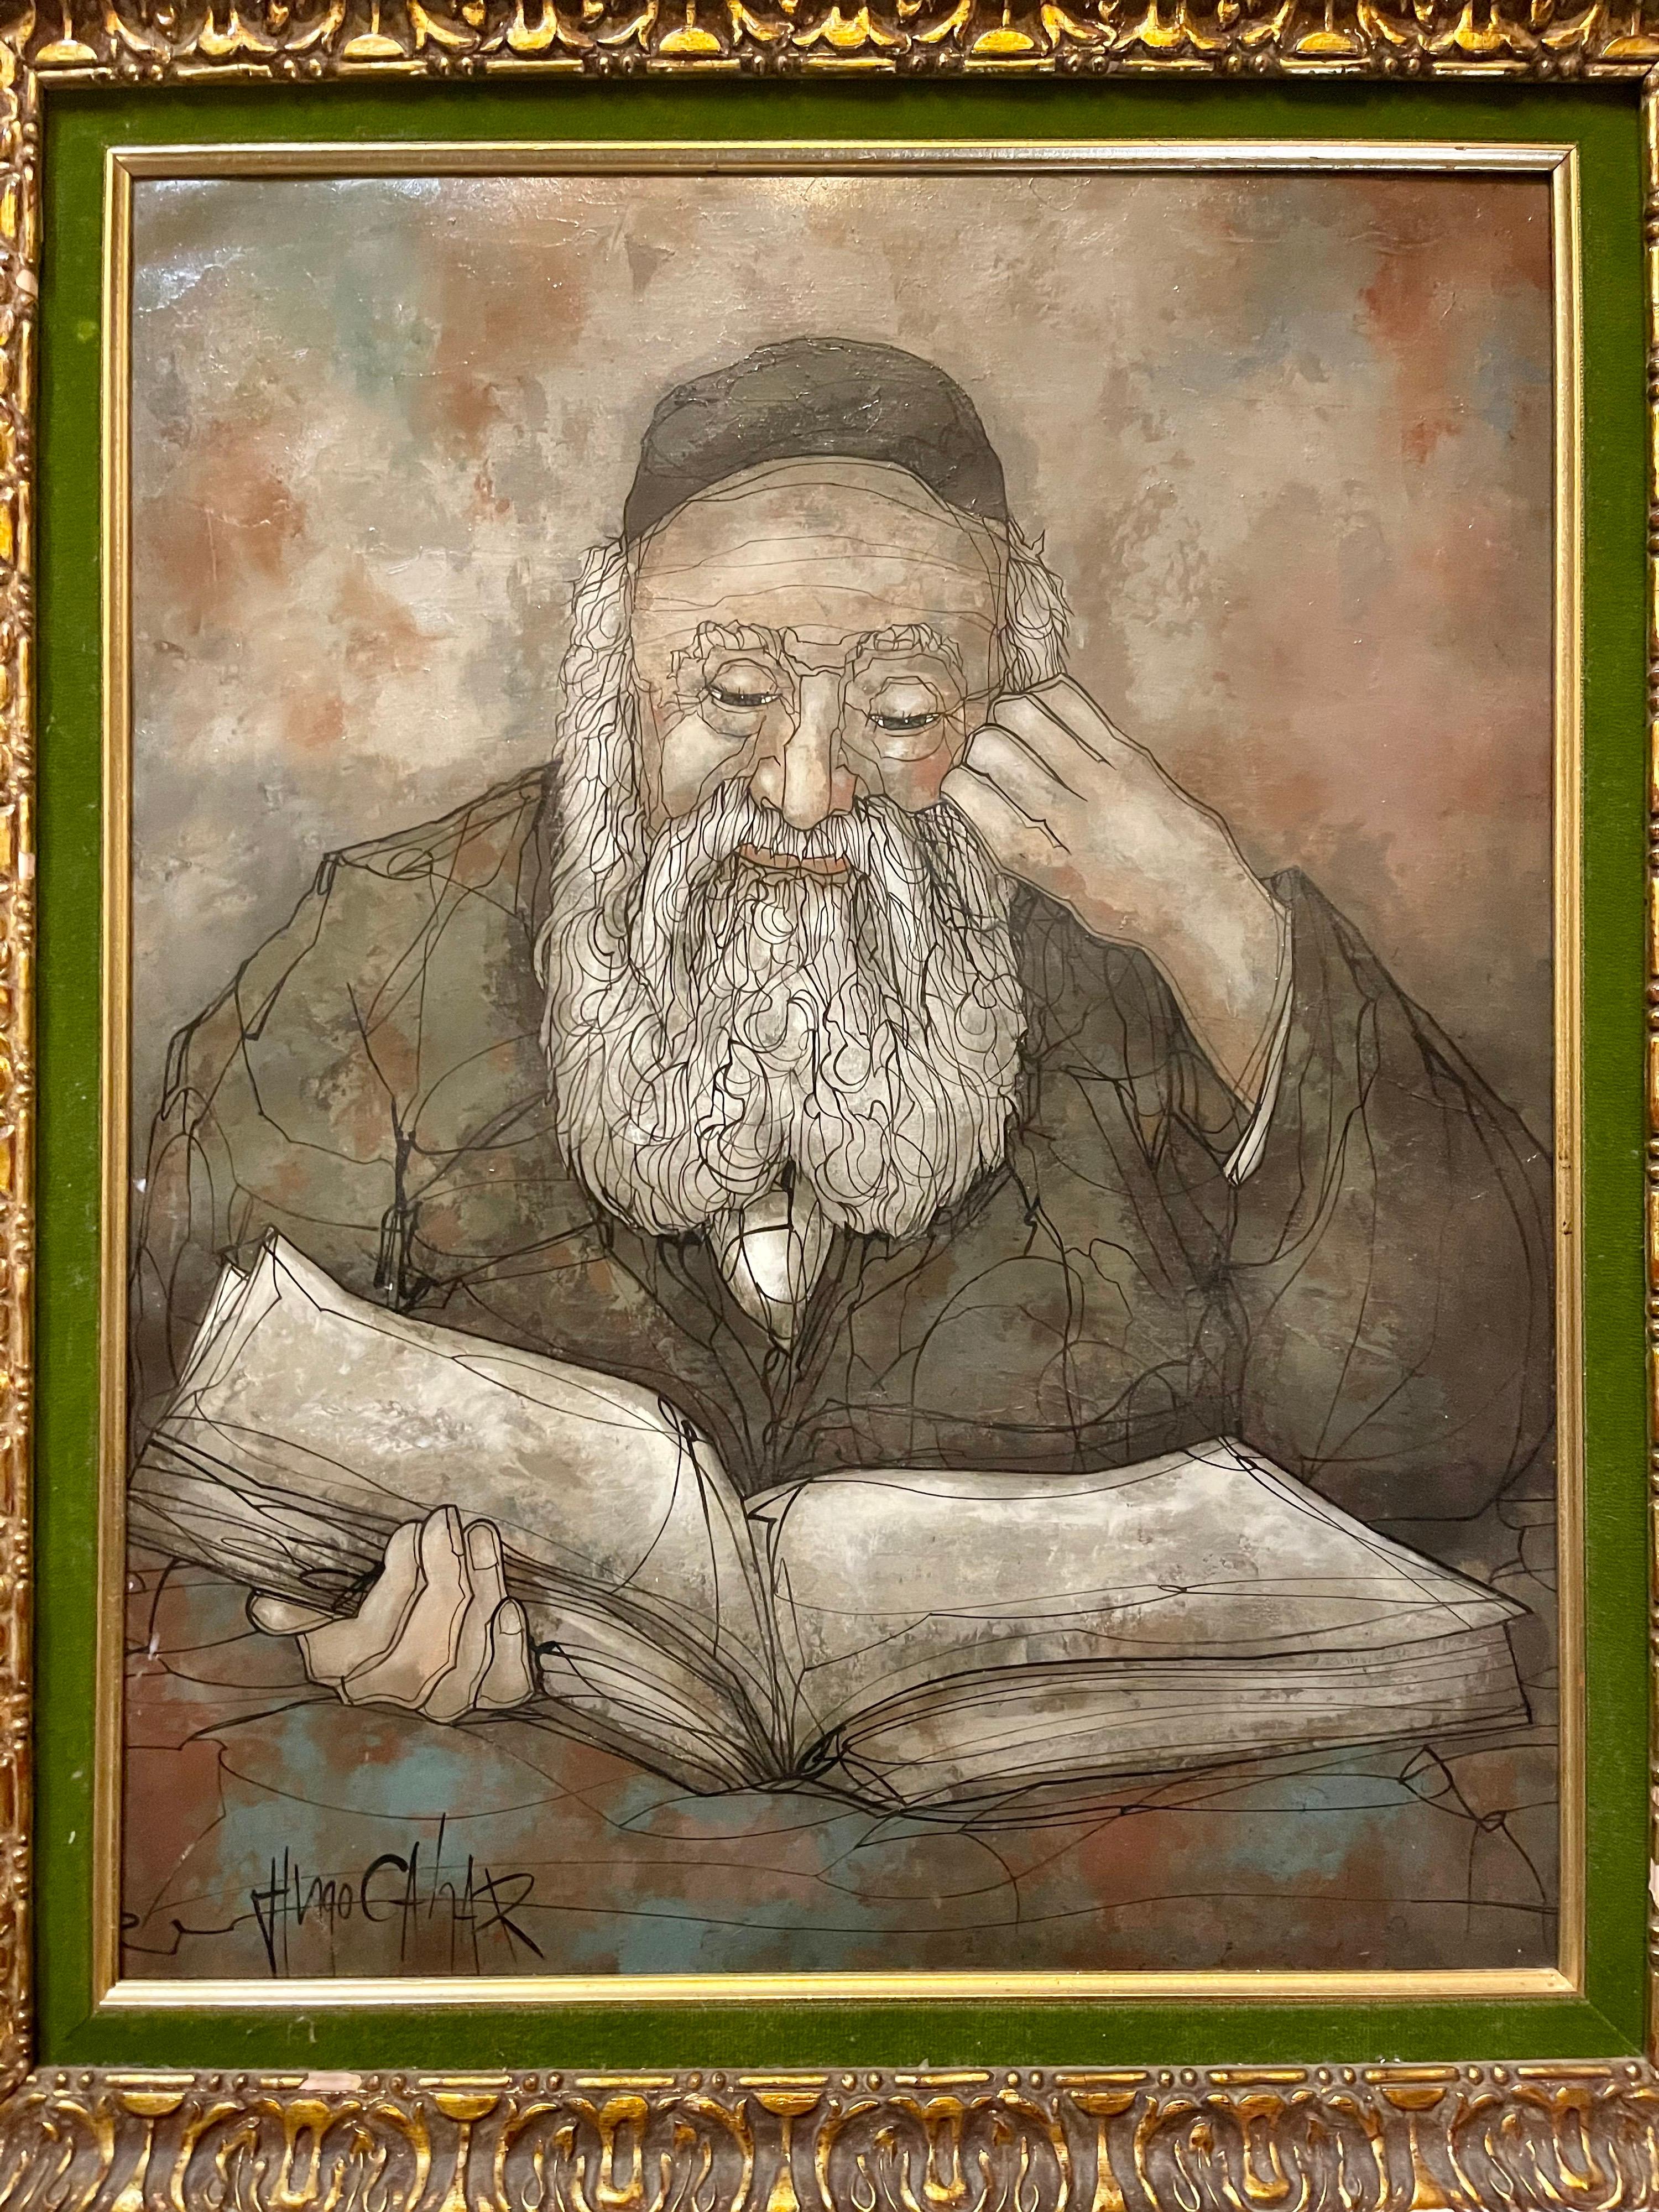 Genre: Modern
Subject: Rabbinical Judaic Portrait, Rabbi Praying
Medium: Oil
Surface: Canvas
Country: Germany
Dimensions: 19.5